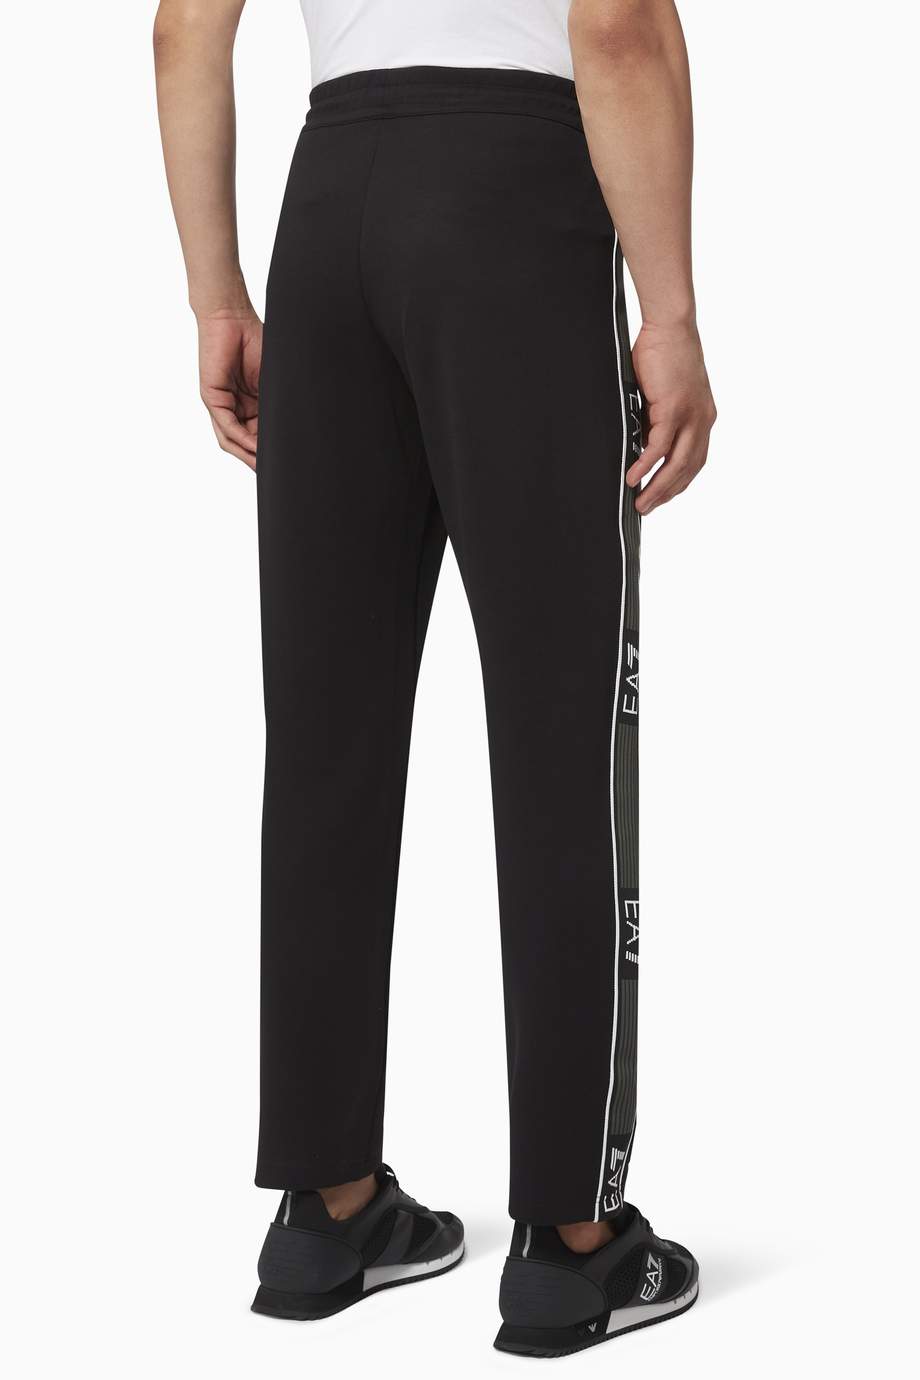 Shop Emporio Armani Black EA7 Tape Jersey Sweatpants for Men | Ounass Saudi